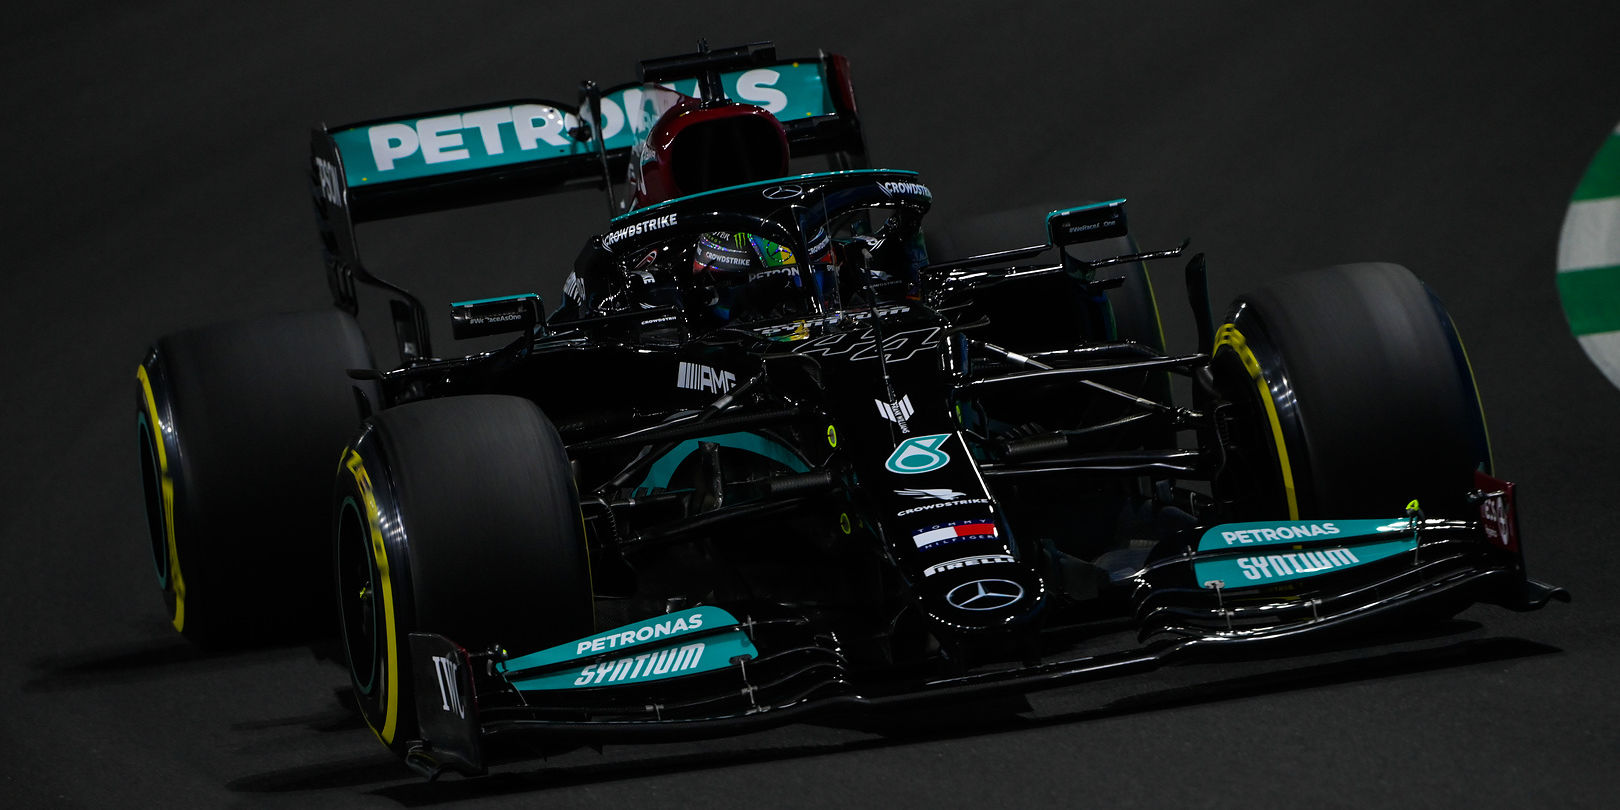 2021 Saudi Arabian Grand Prix, Friday - Lewis Hamilton